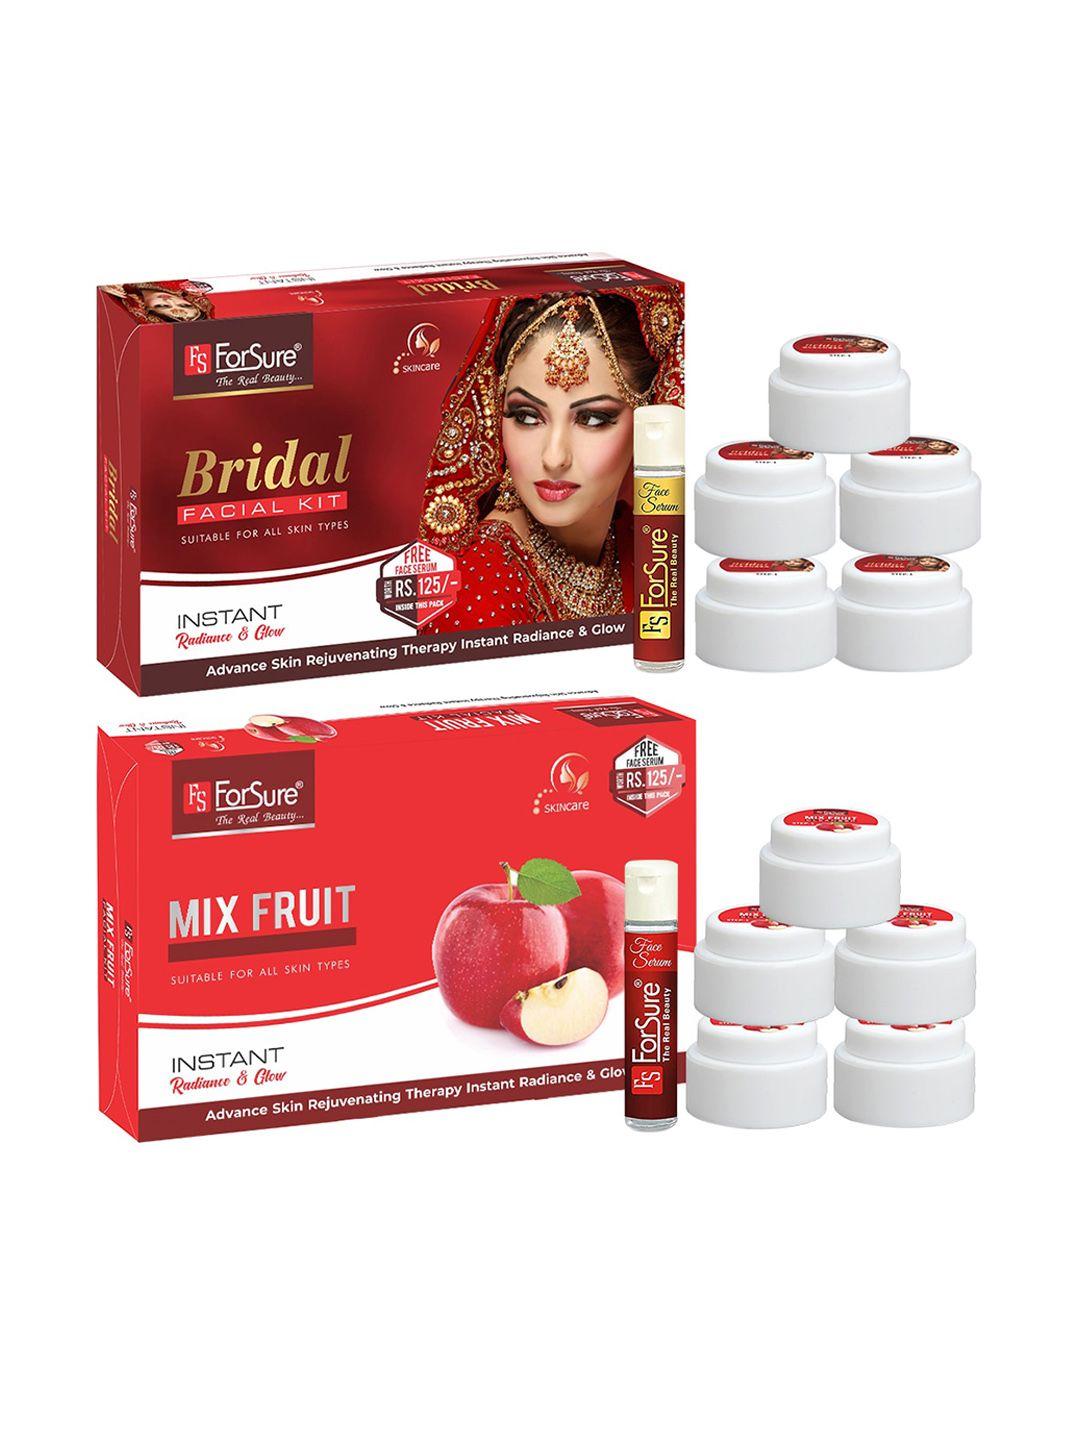 forsure set of bridal & mix fruit facial kit - 80 g each